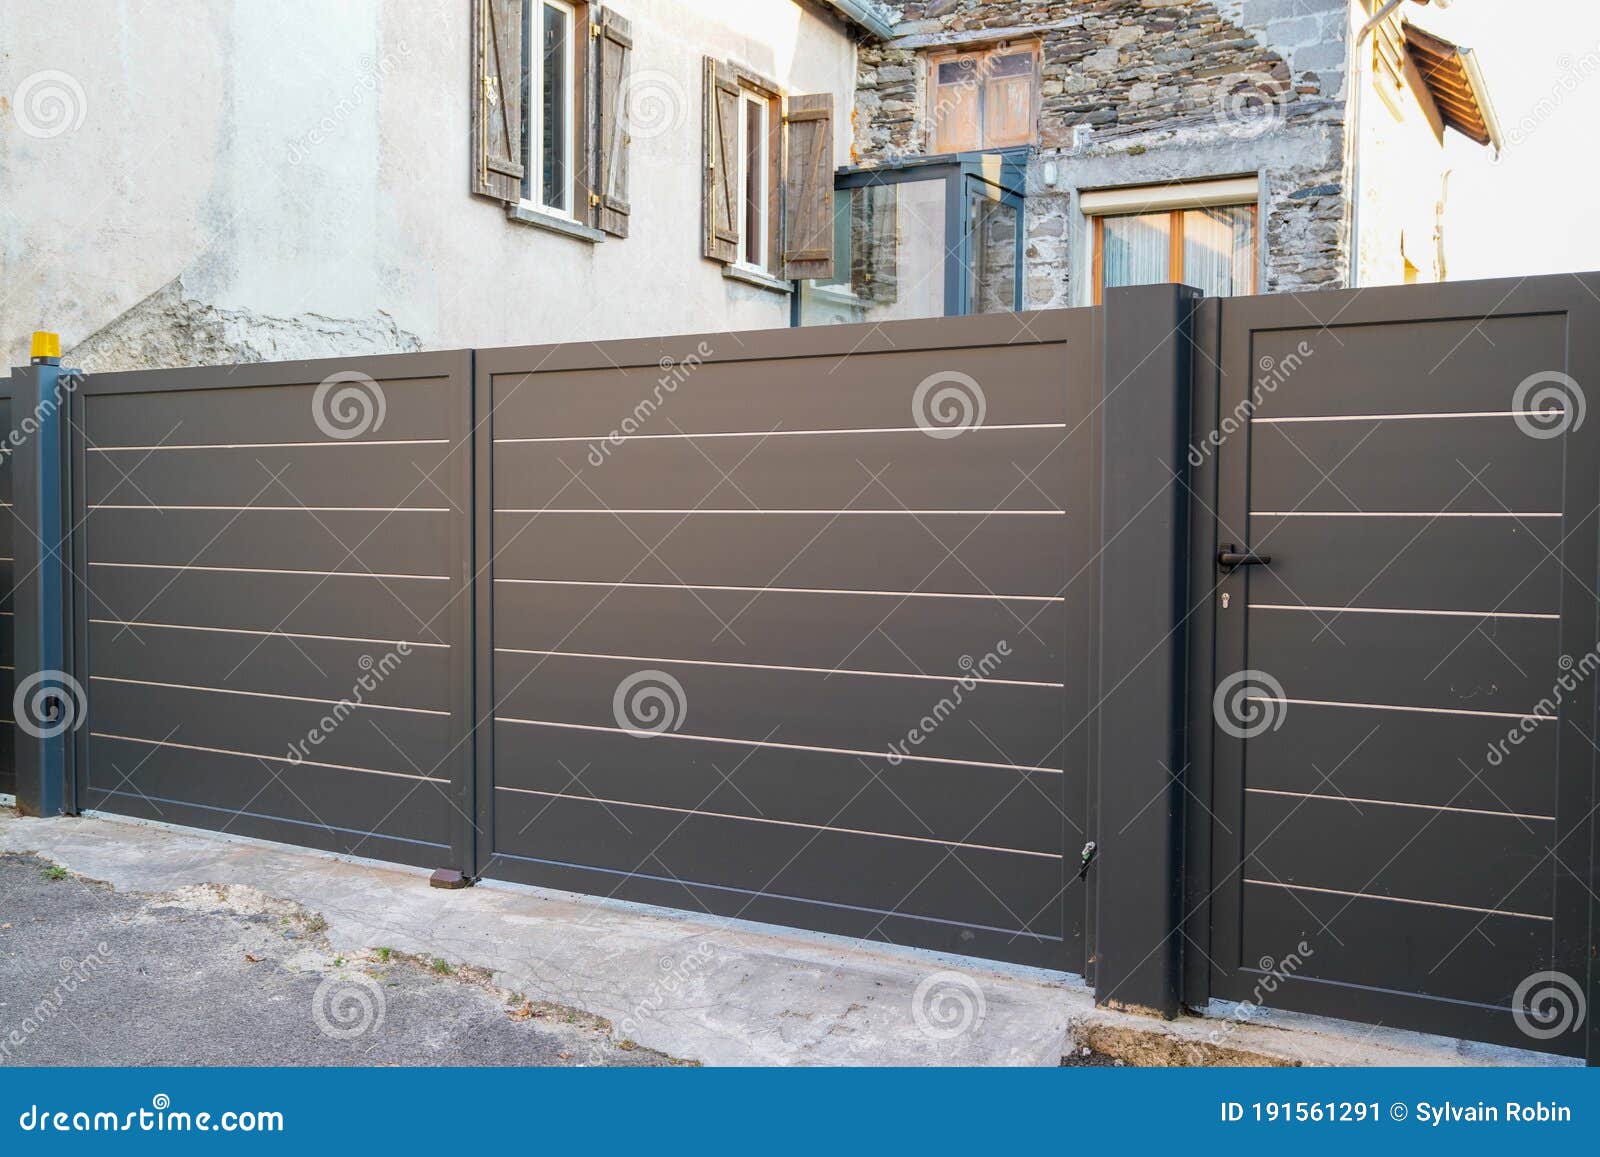 Aluminum Dark Brown Gate of Home Portal of Suburb House Stock ...